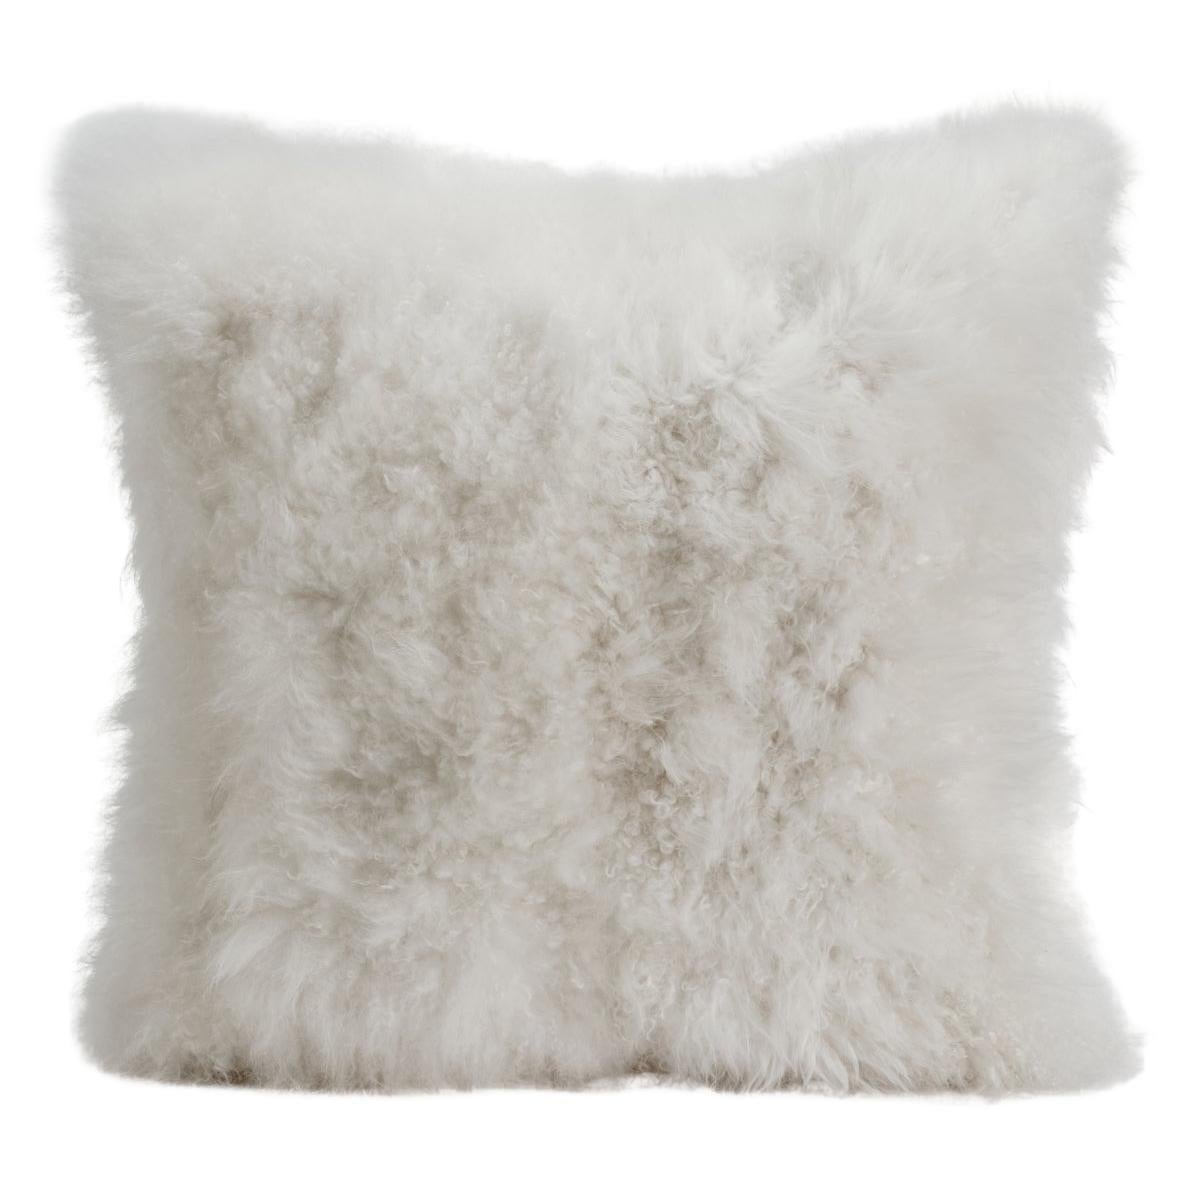 Big Cloud White Natural Cashmere Fur Pillow Cushion by Muchi Decor